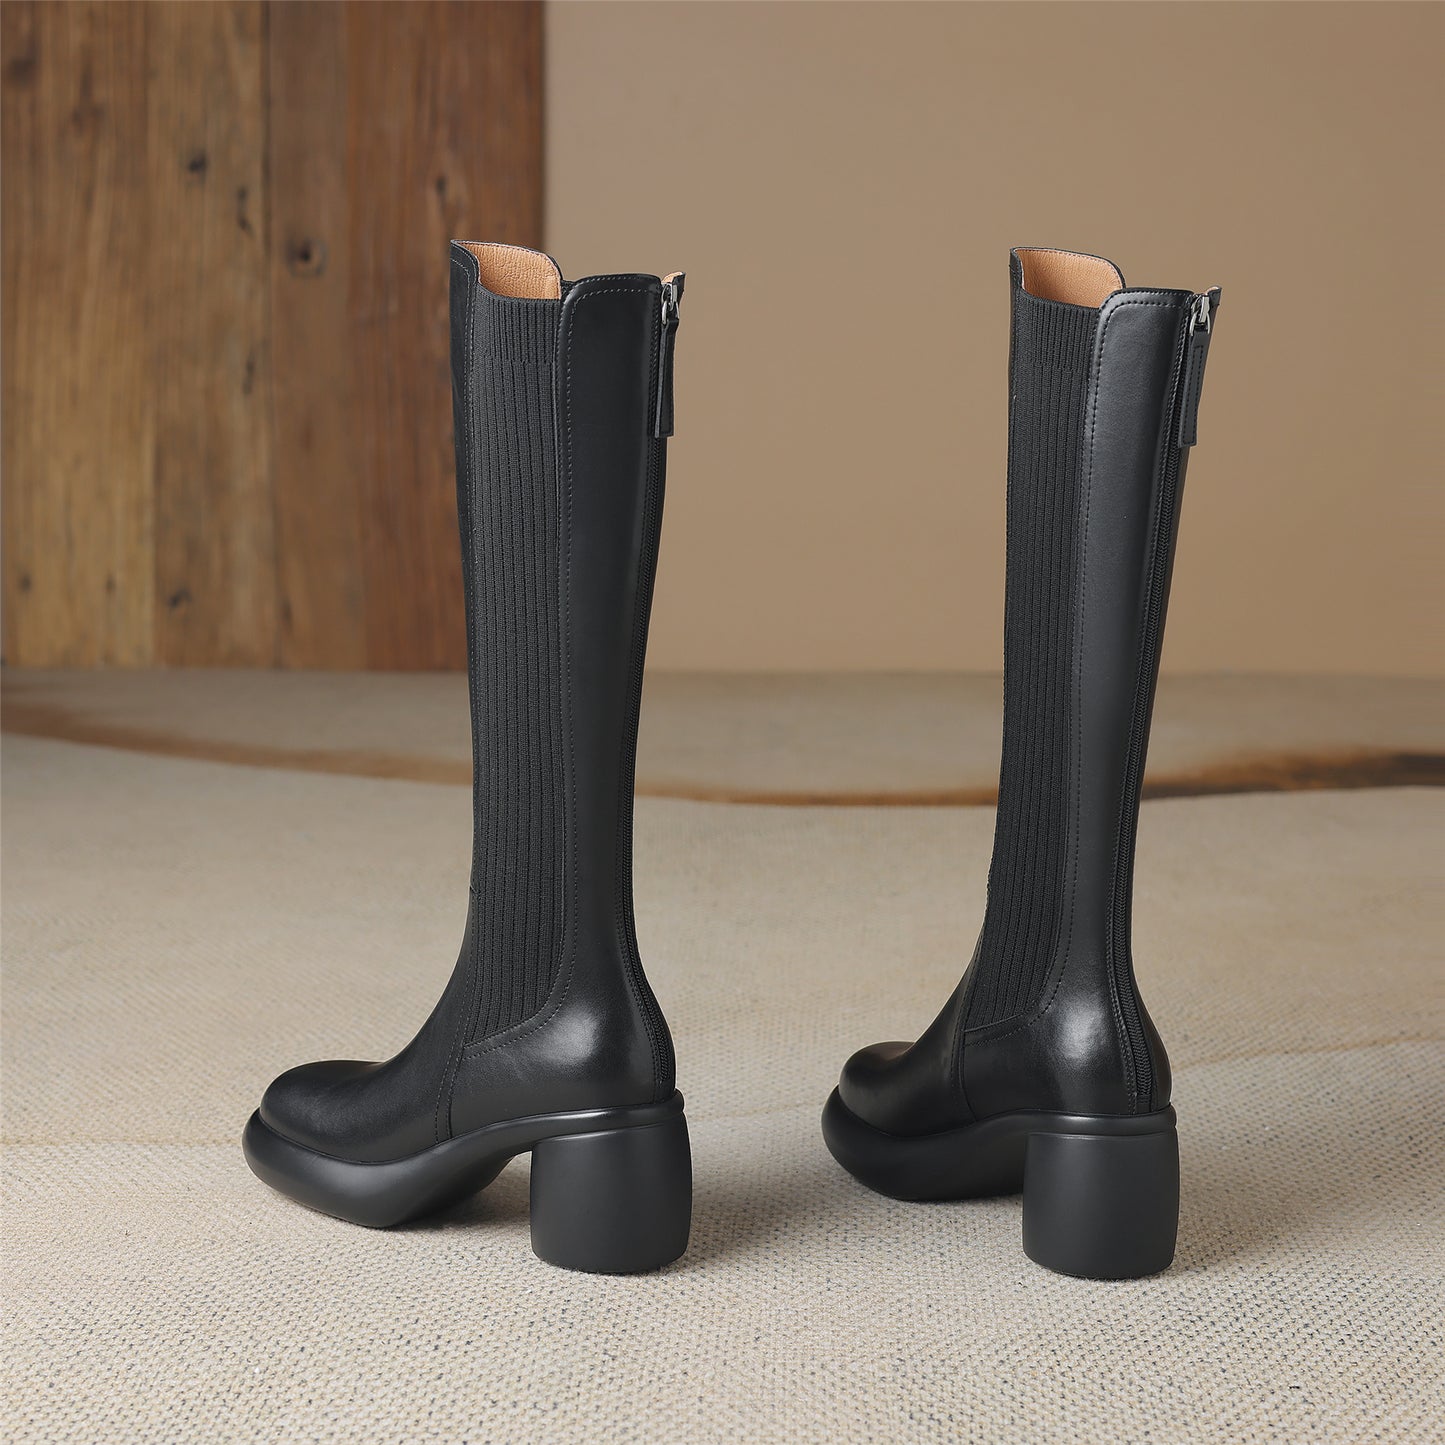 TinaCus Women's Round Toe Genuine Leather Handmade Block Heel Back Zip Knee High Boots